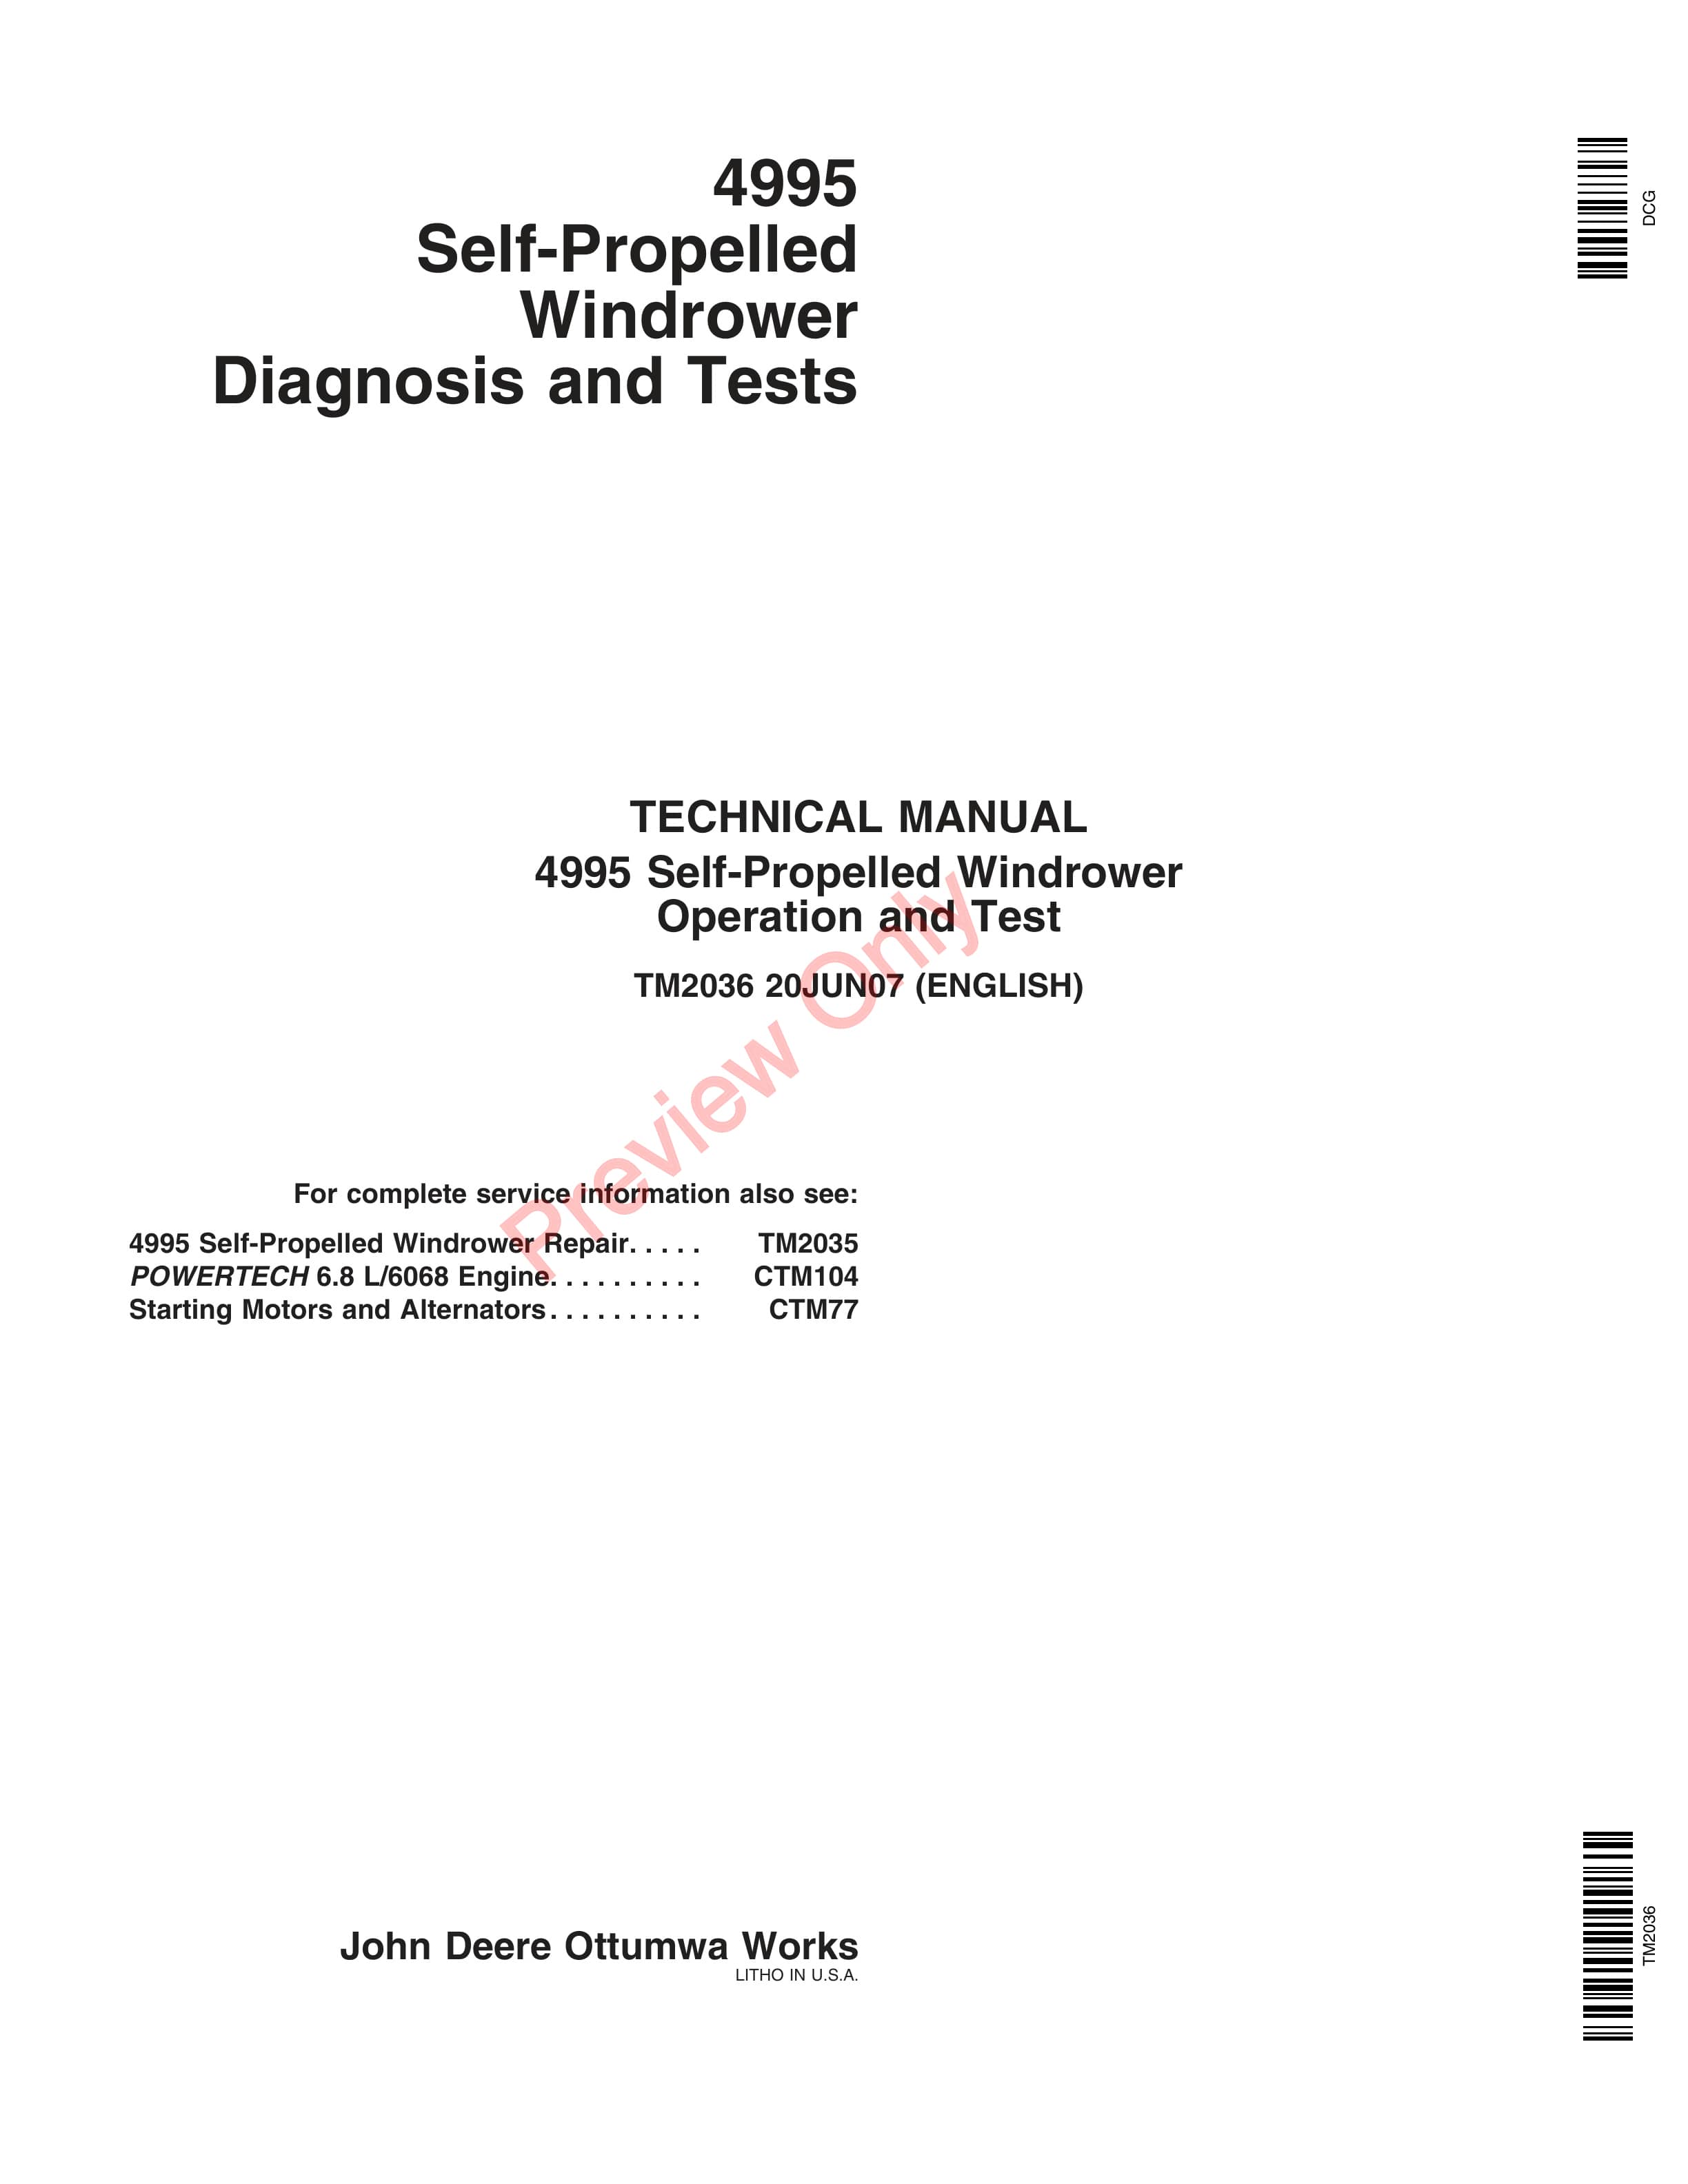 John Deere 4995 Self Propelled Windrower Technical Manual TM2036 20JUN07 1